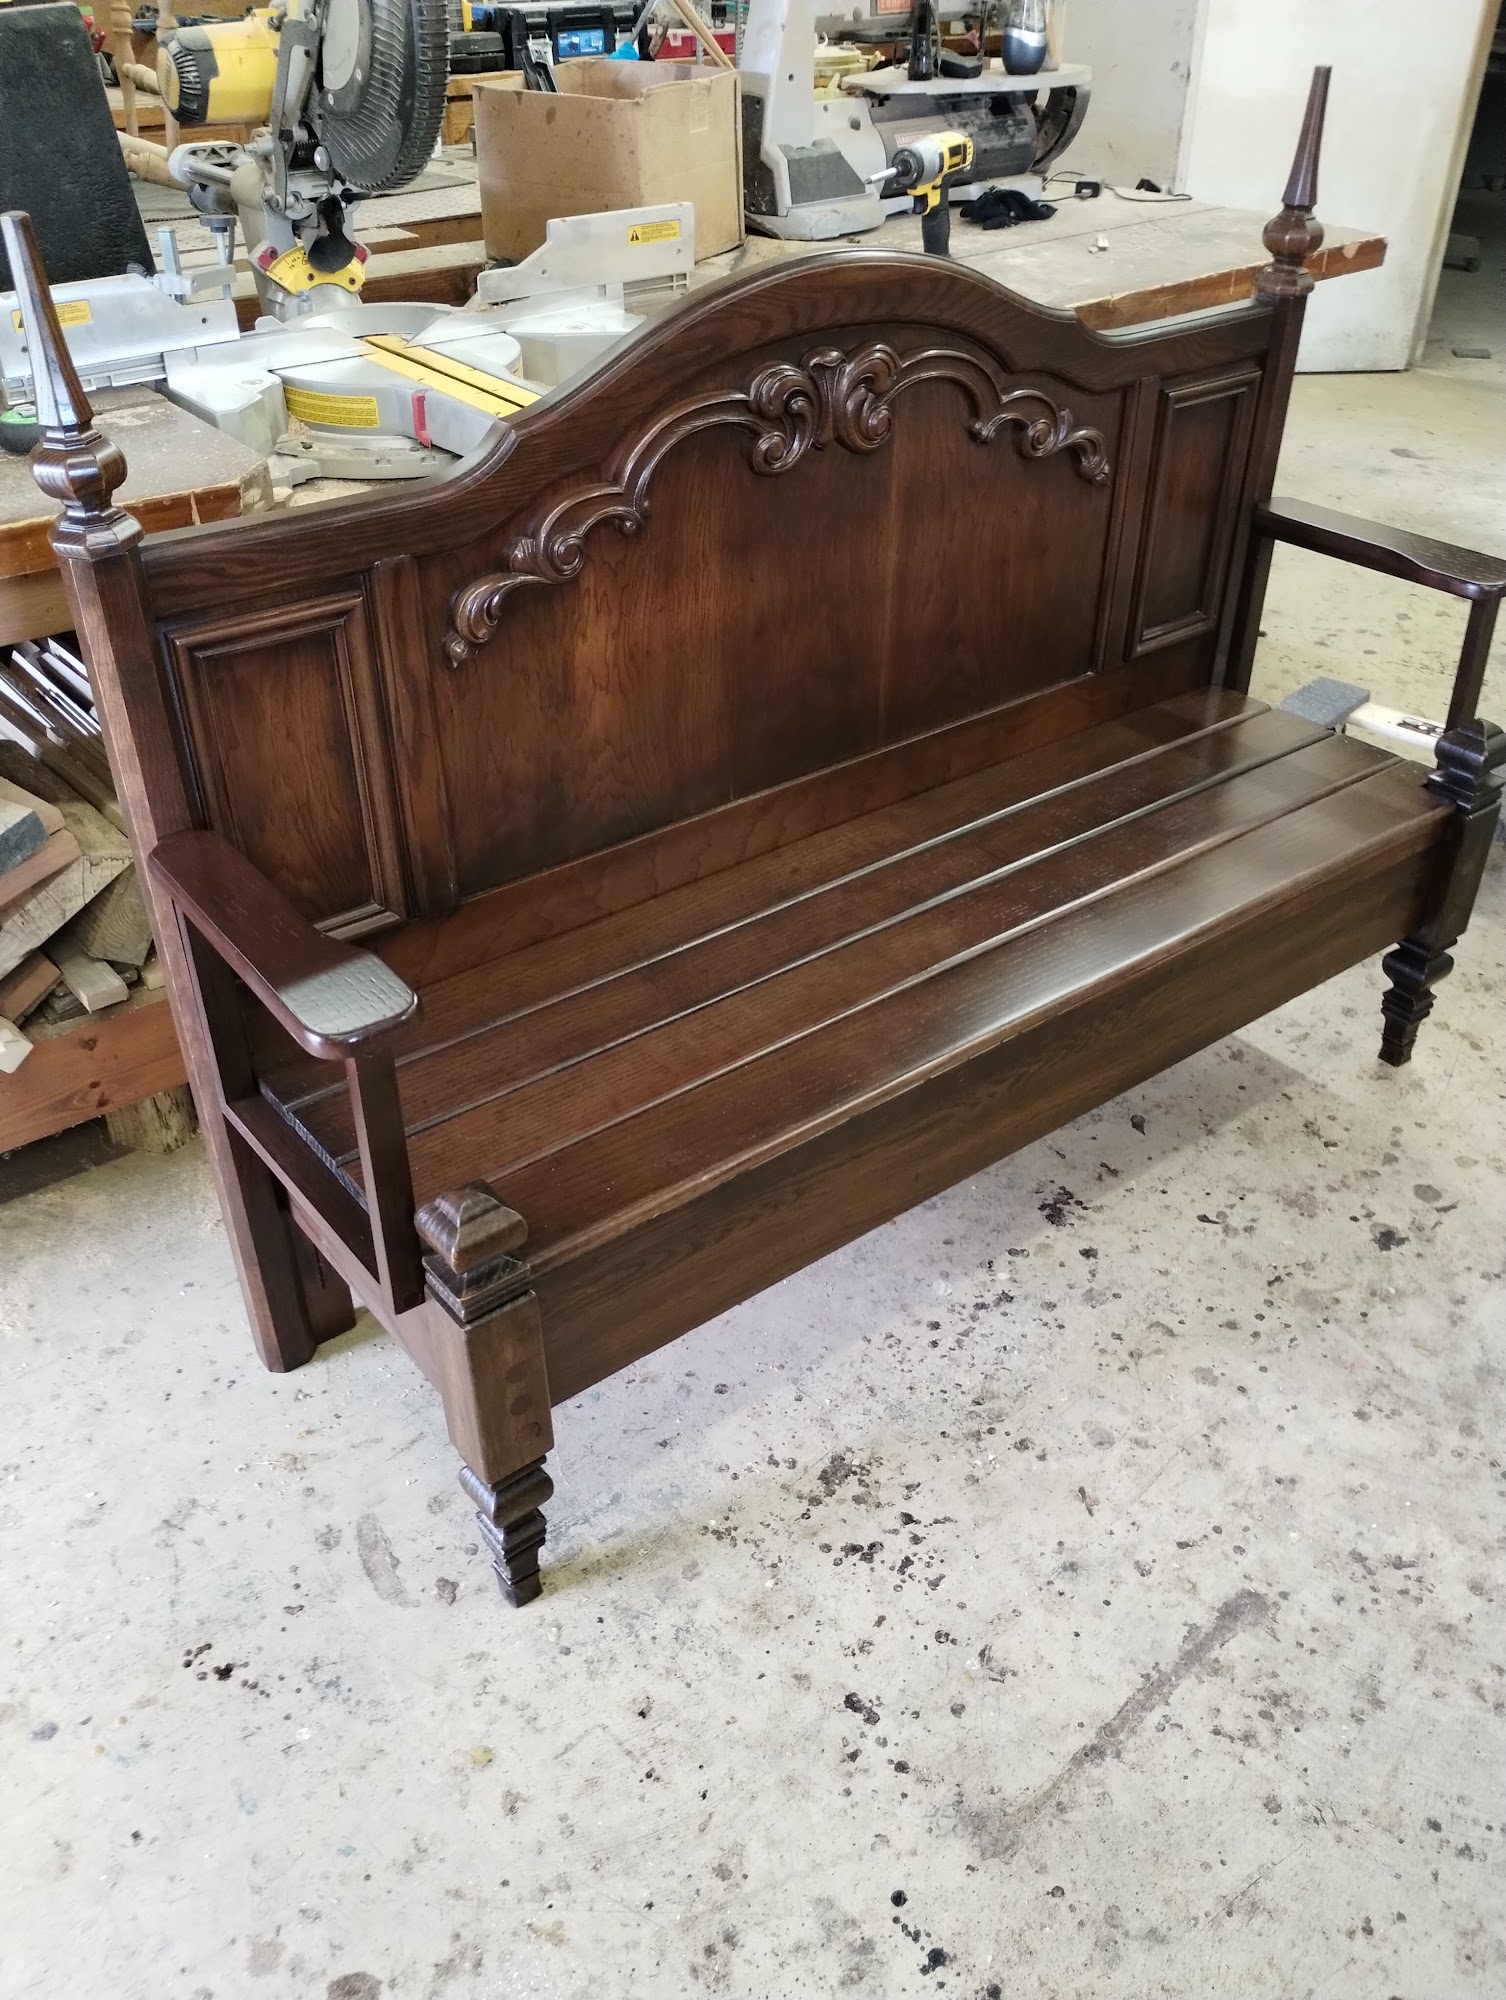 Duncan Furniture Refinishing And Antique Restoration